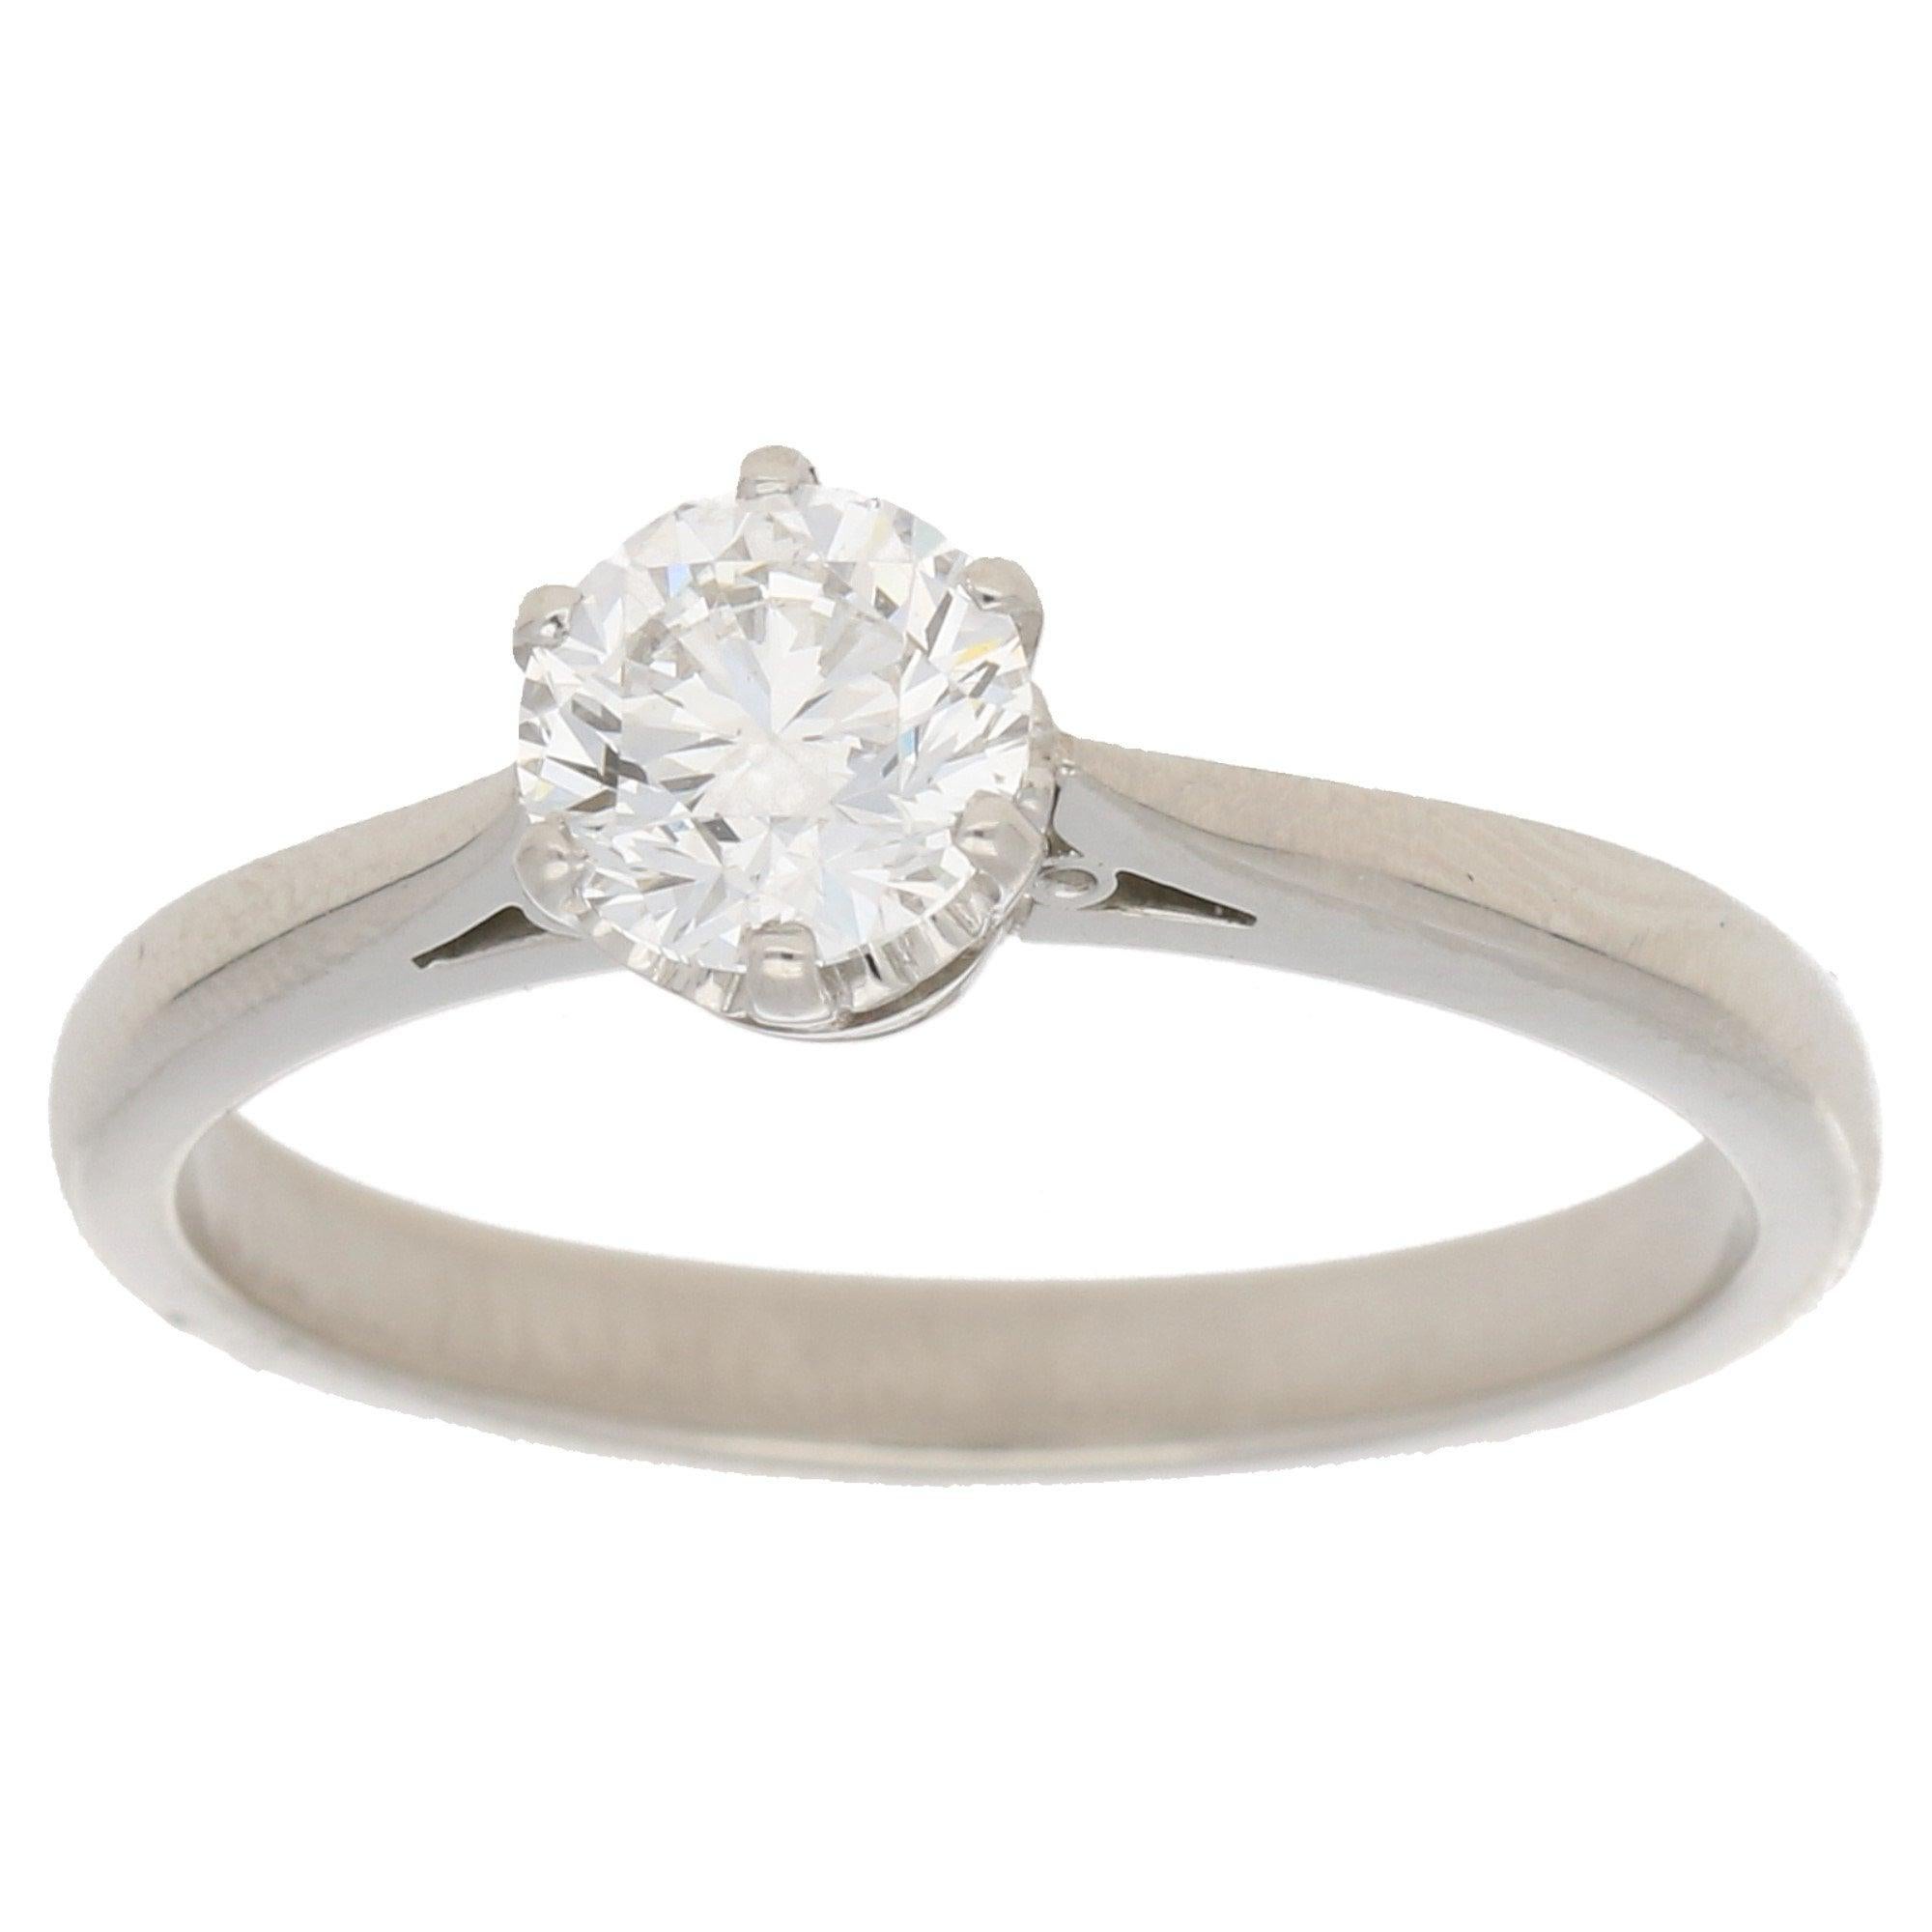 Modern Certified Round Brilliant Solitaire Diamond Engagement Ring Set in Platinum